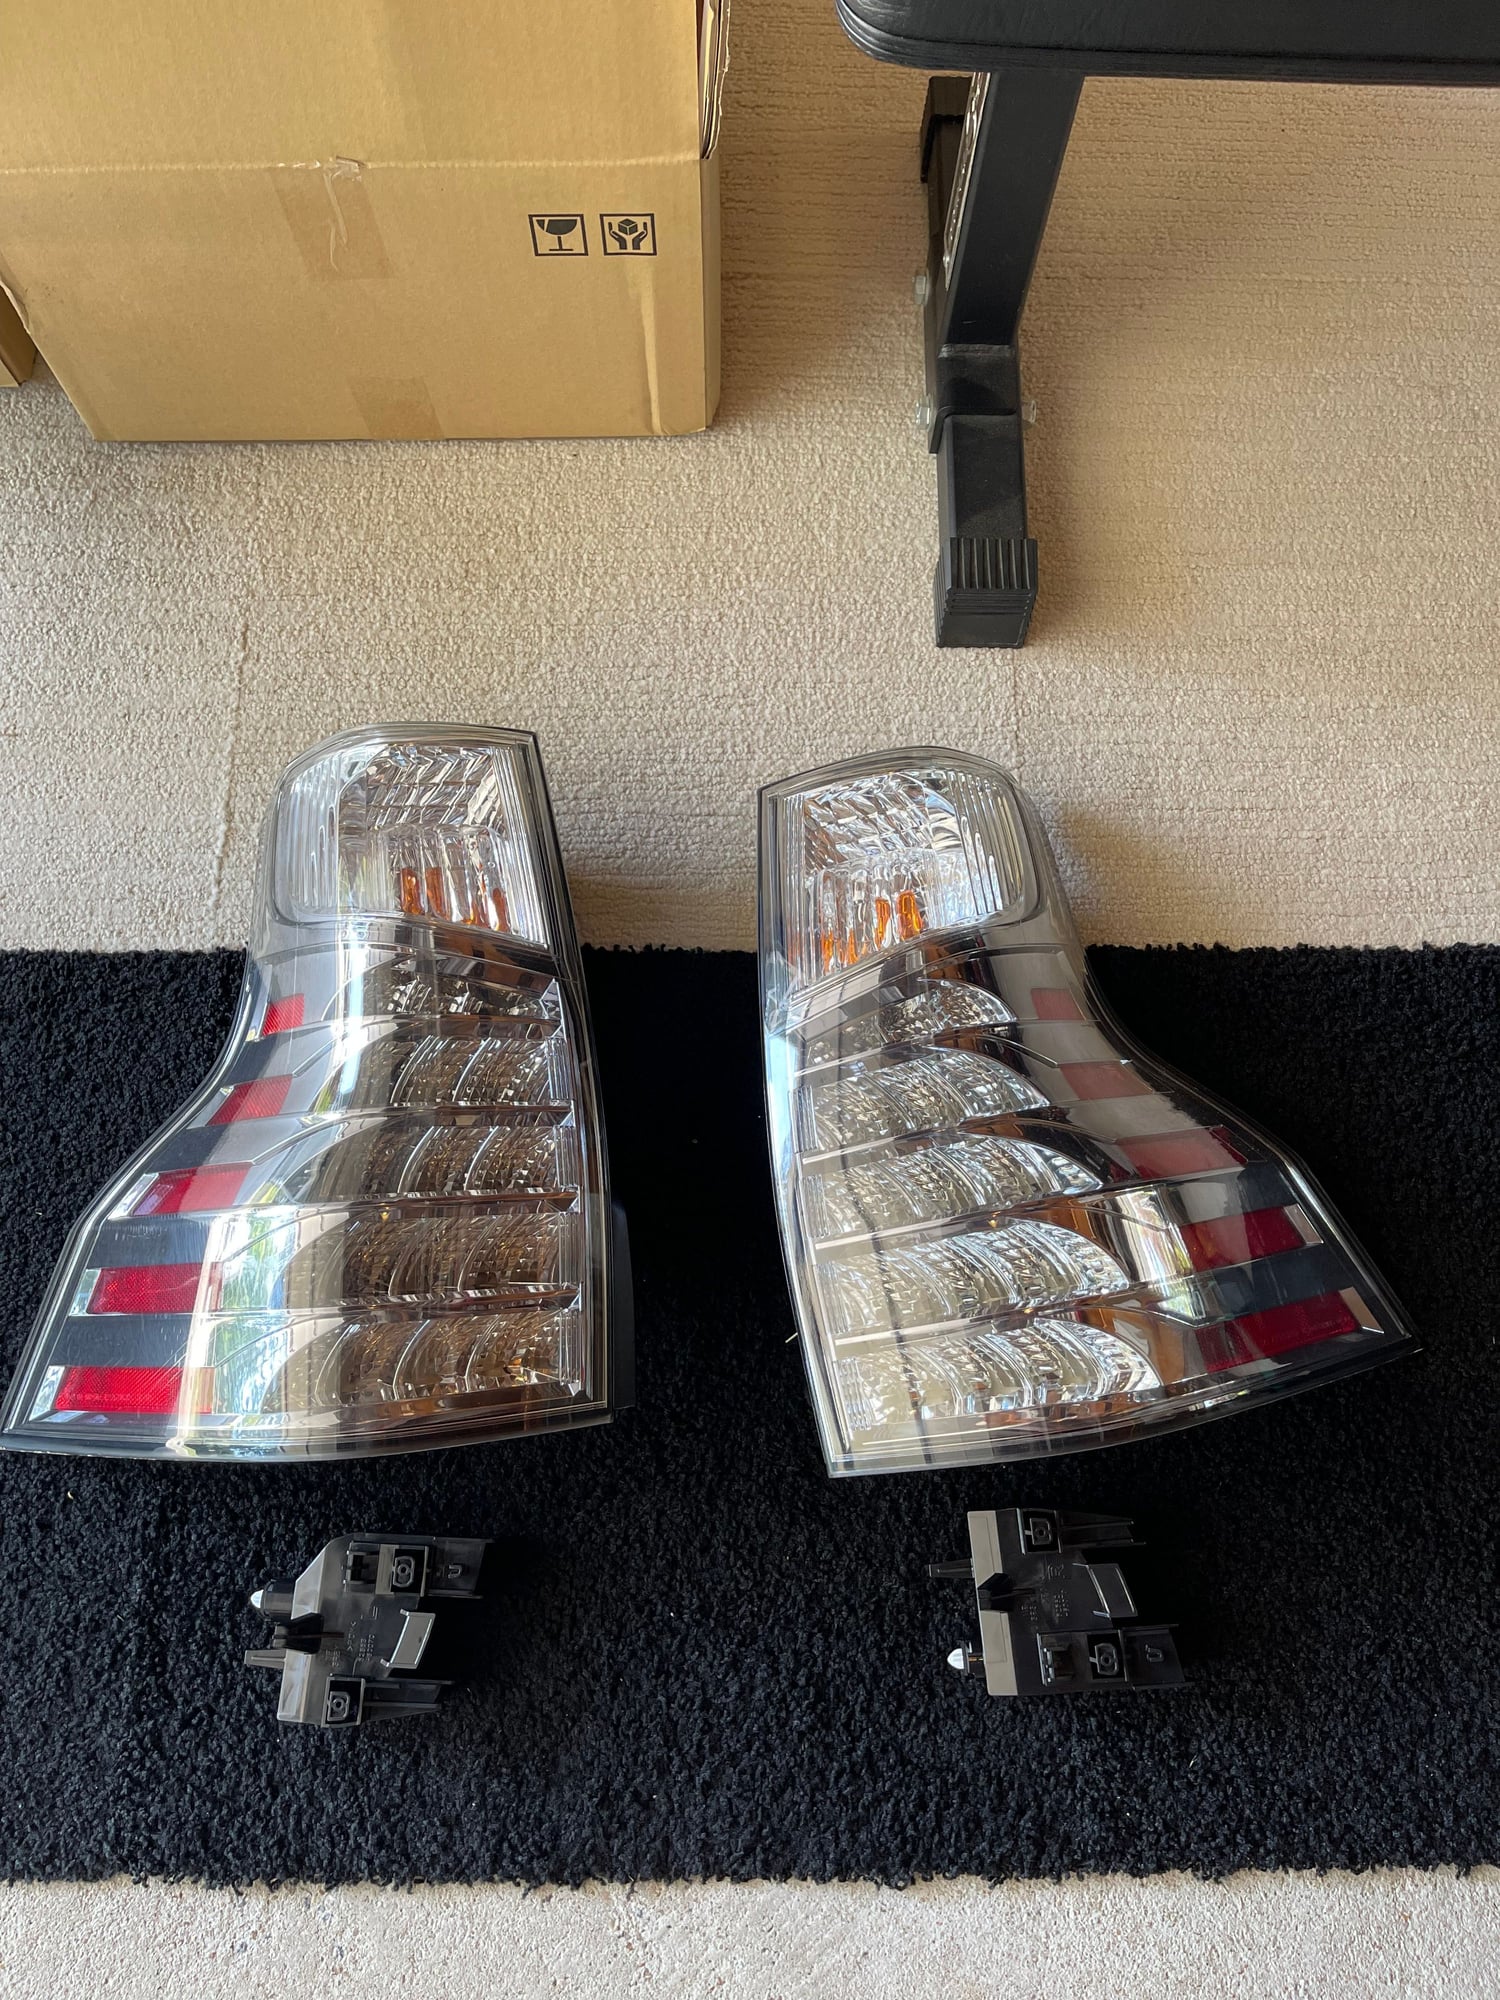 Lights - 2016 rear brake lamp housing - Used - 2014 to 2019 Lexus GX460 - Marietta, GA 30062, United States